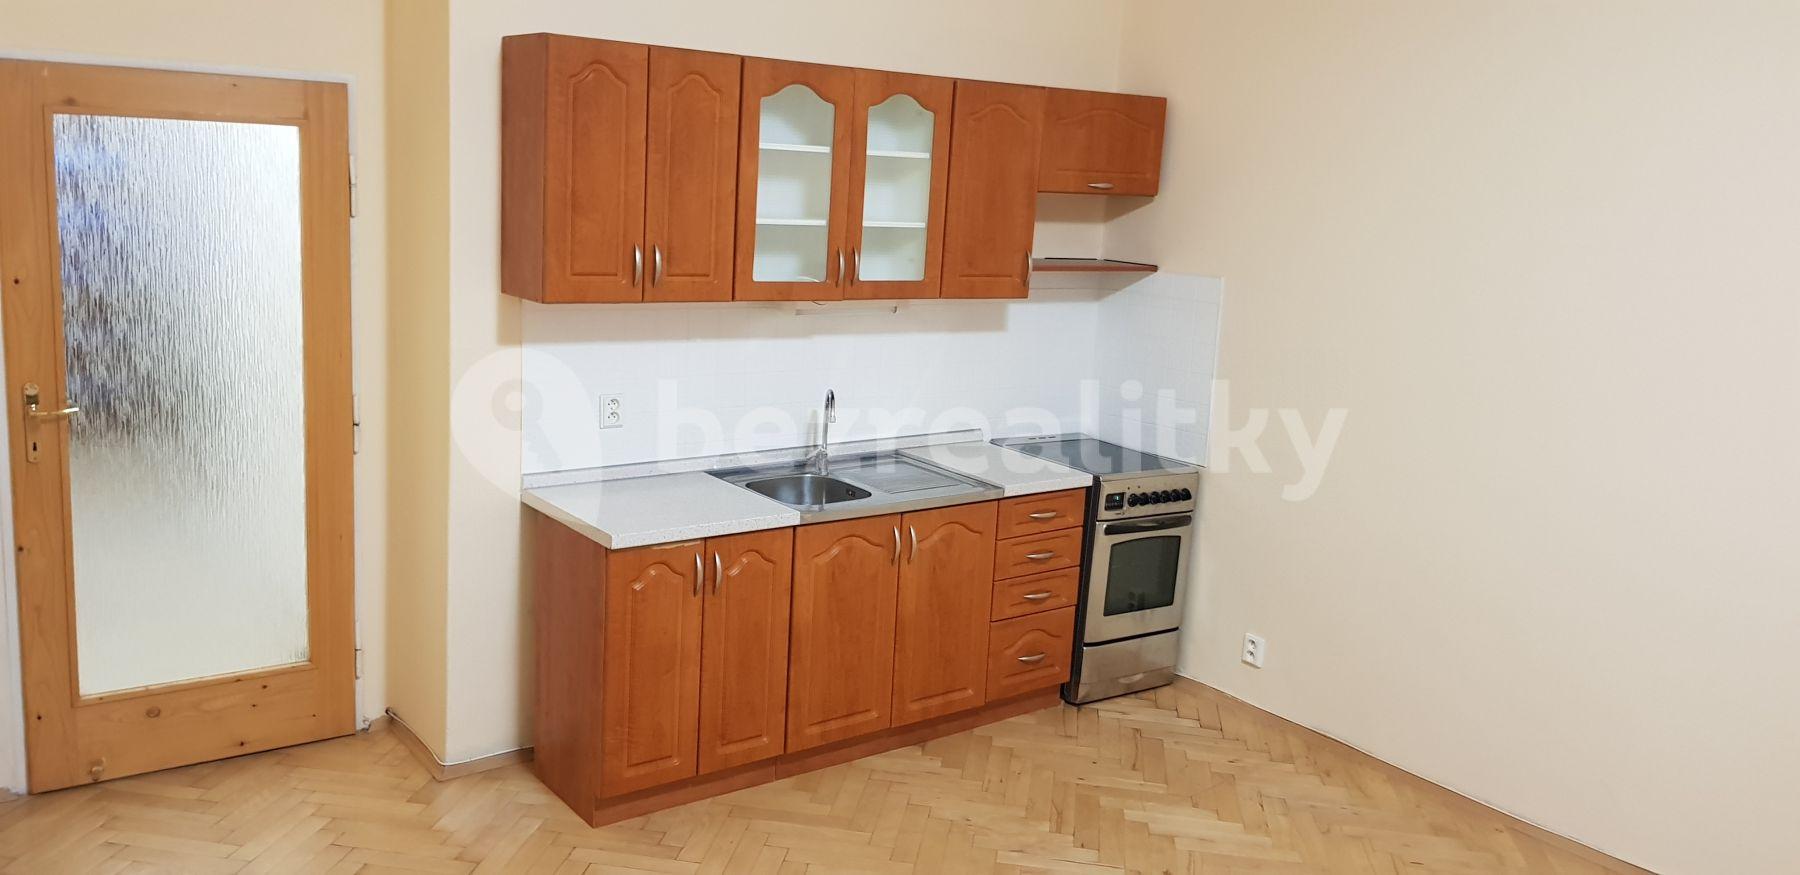 1 bedroom with open-plan kitchen flat to rent, 52 m², Křišťanova, Prague, Prague